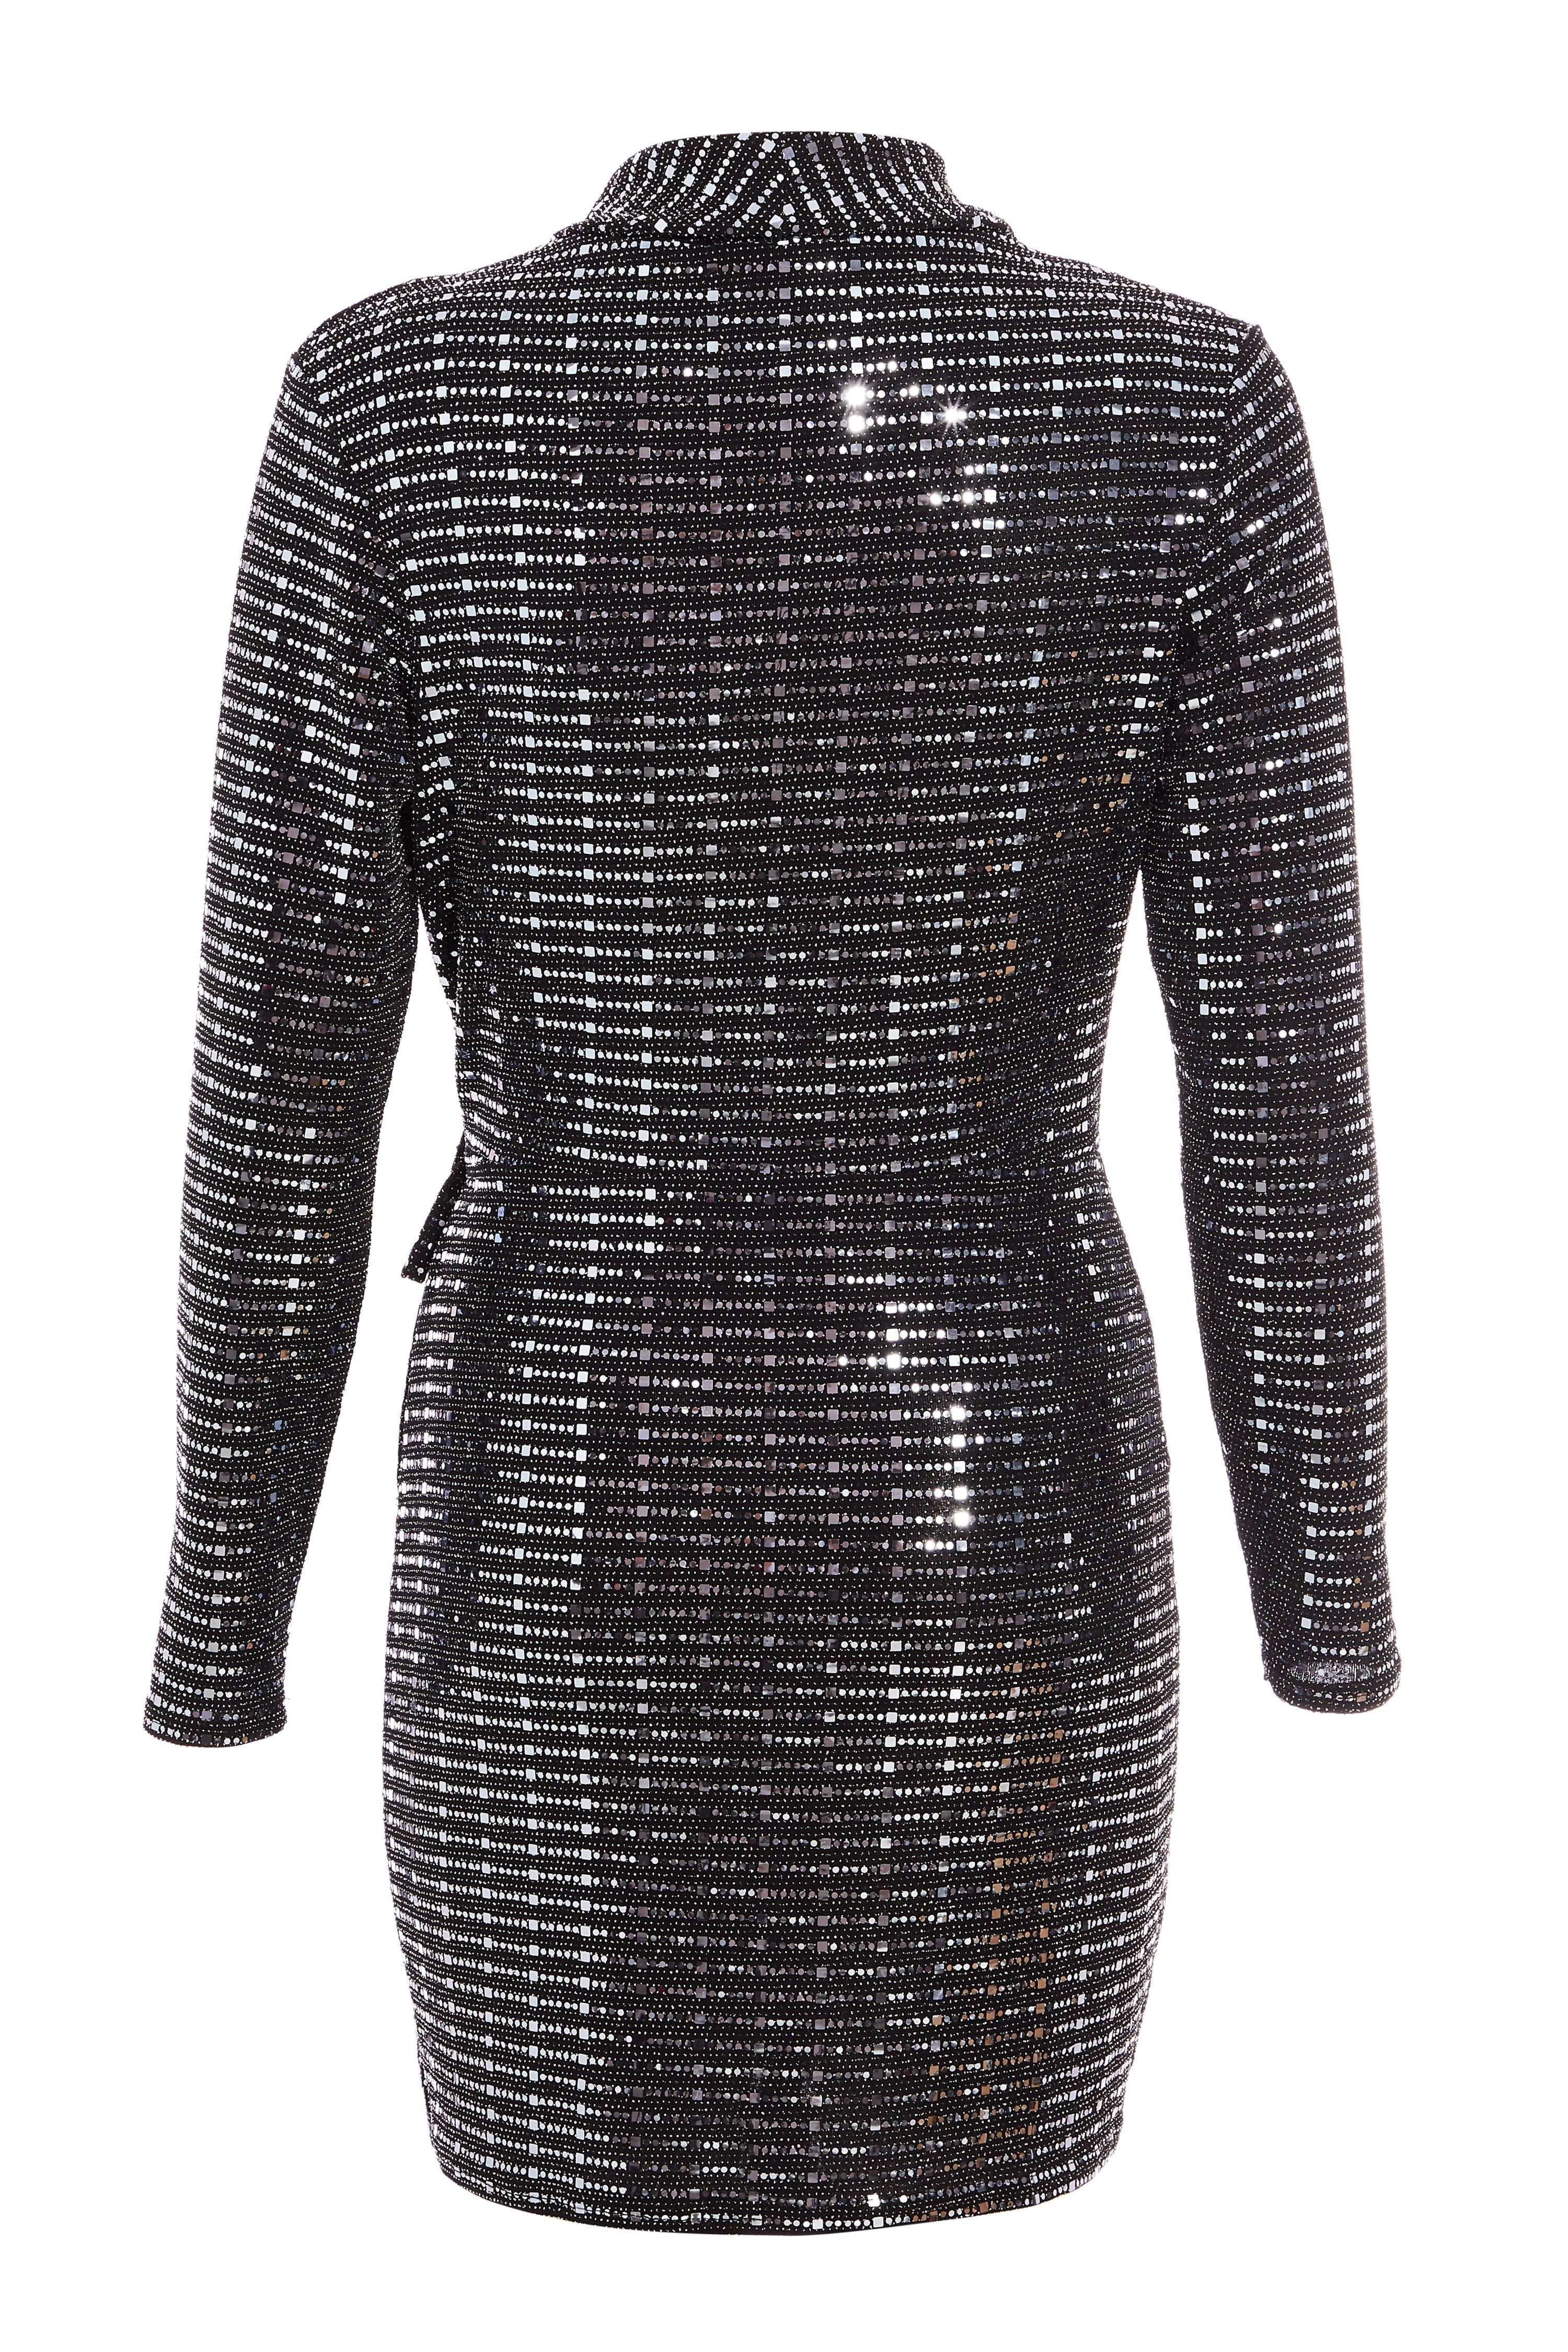 - Petite collection  - Sequin embellished  - Wrap front  - Long sleeve  - 87% Nylon, 8% Metallic Fibre, 5% Elastane  - Model Height: 5' 4